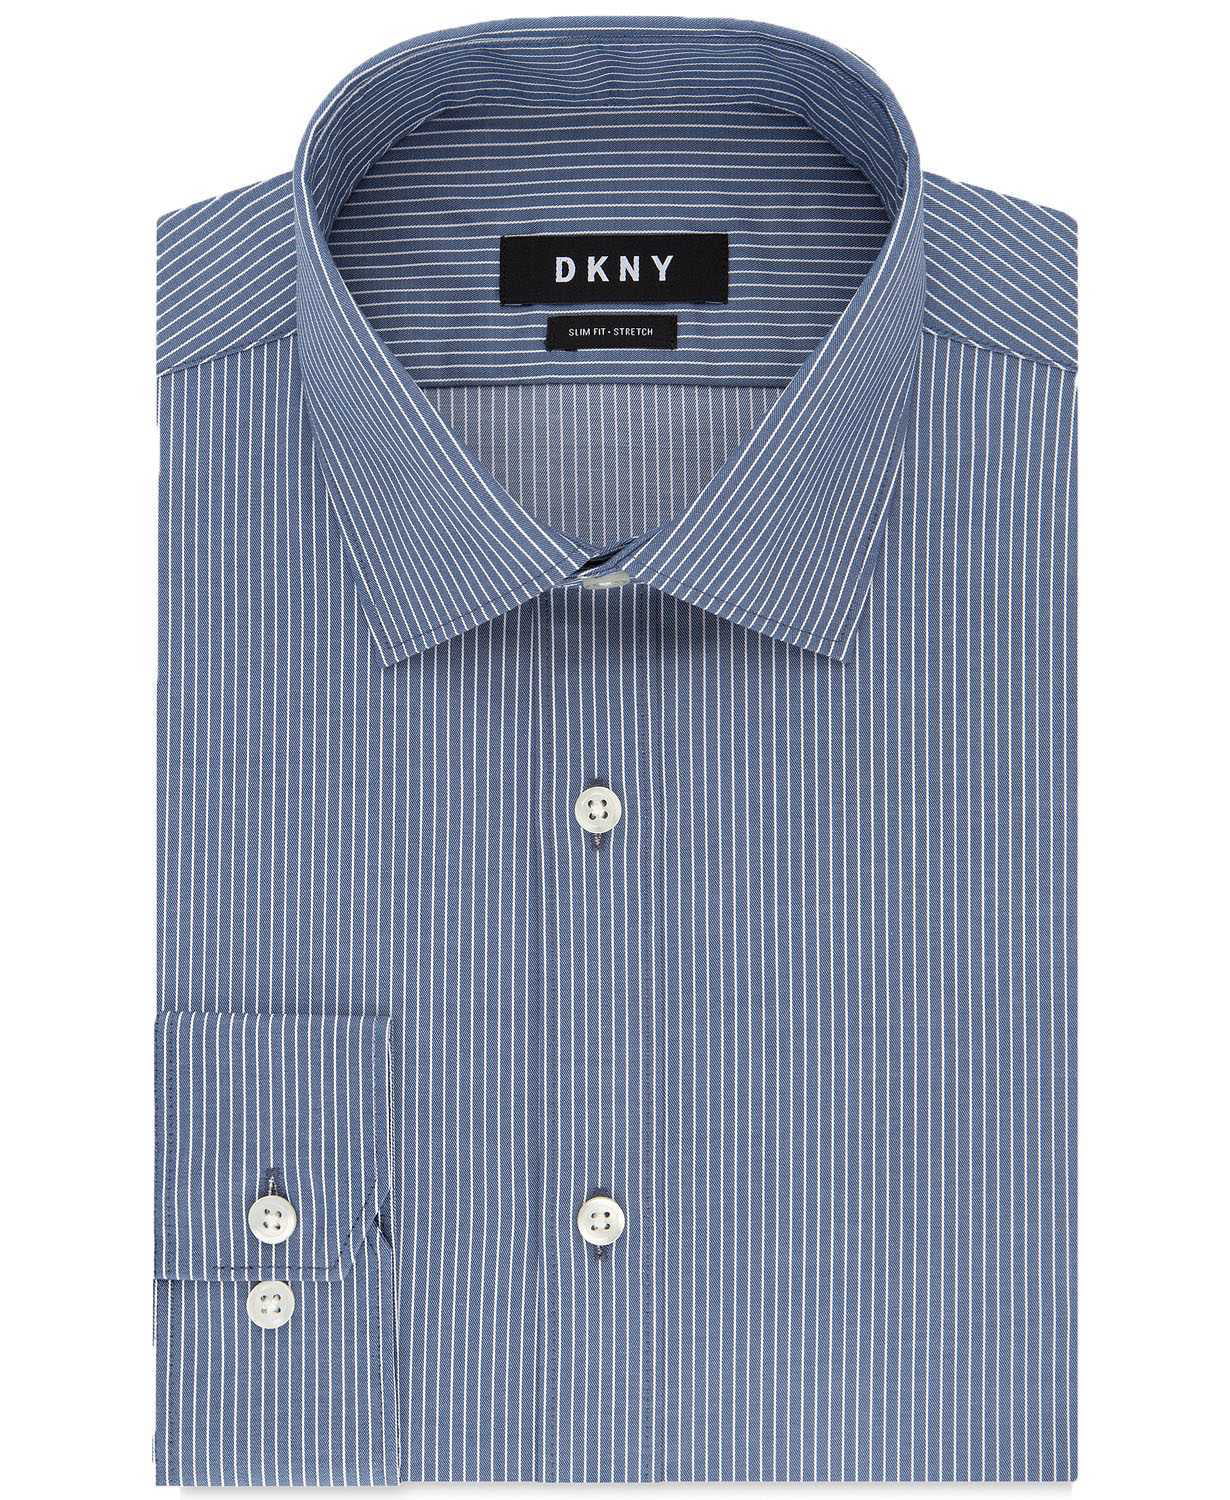 Details about   DKNY Men's Slim Fit Stretch Dress Shirt Textured Stripe Pool Blue 16 1/2 32/33 L 